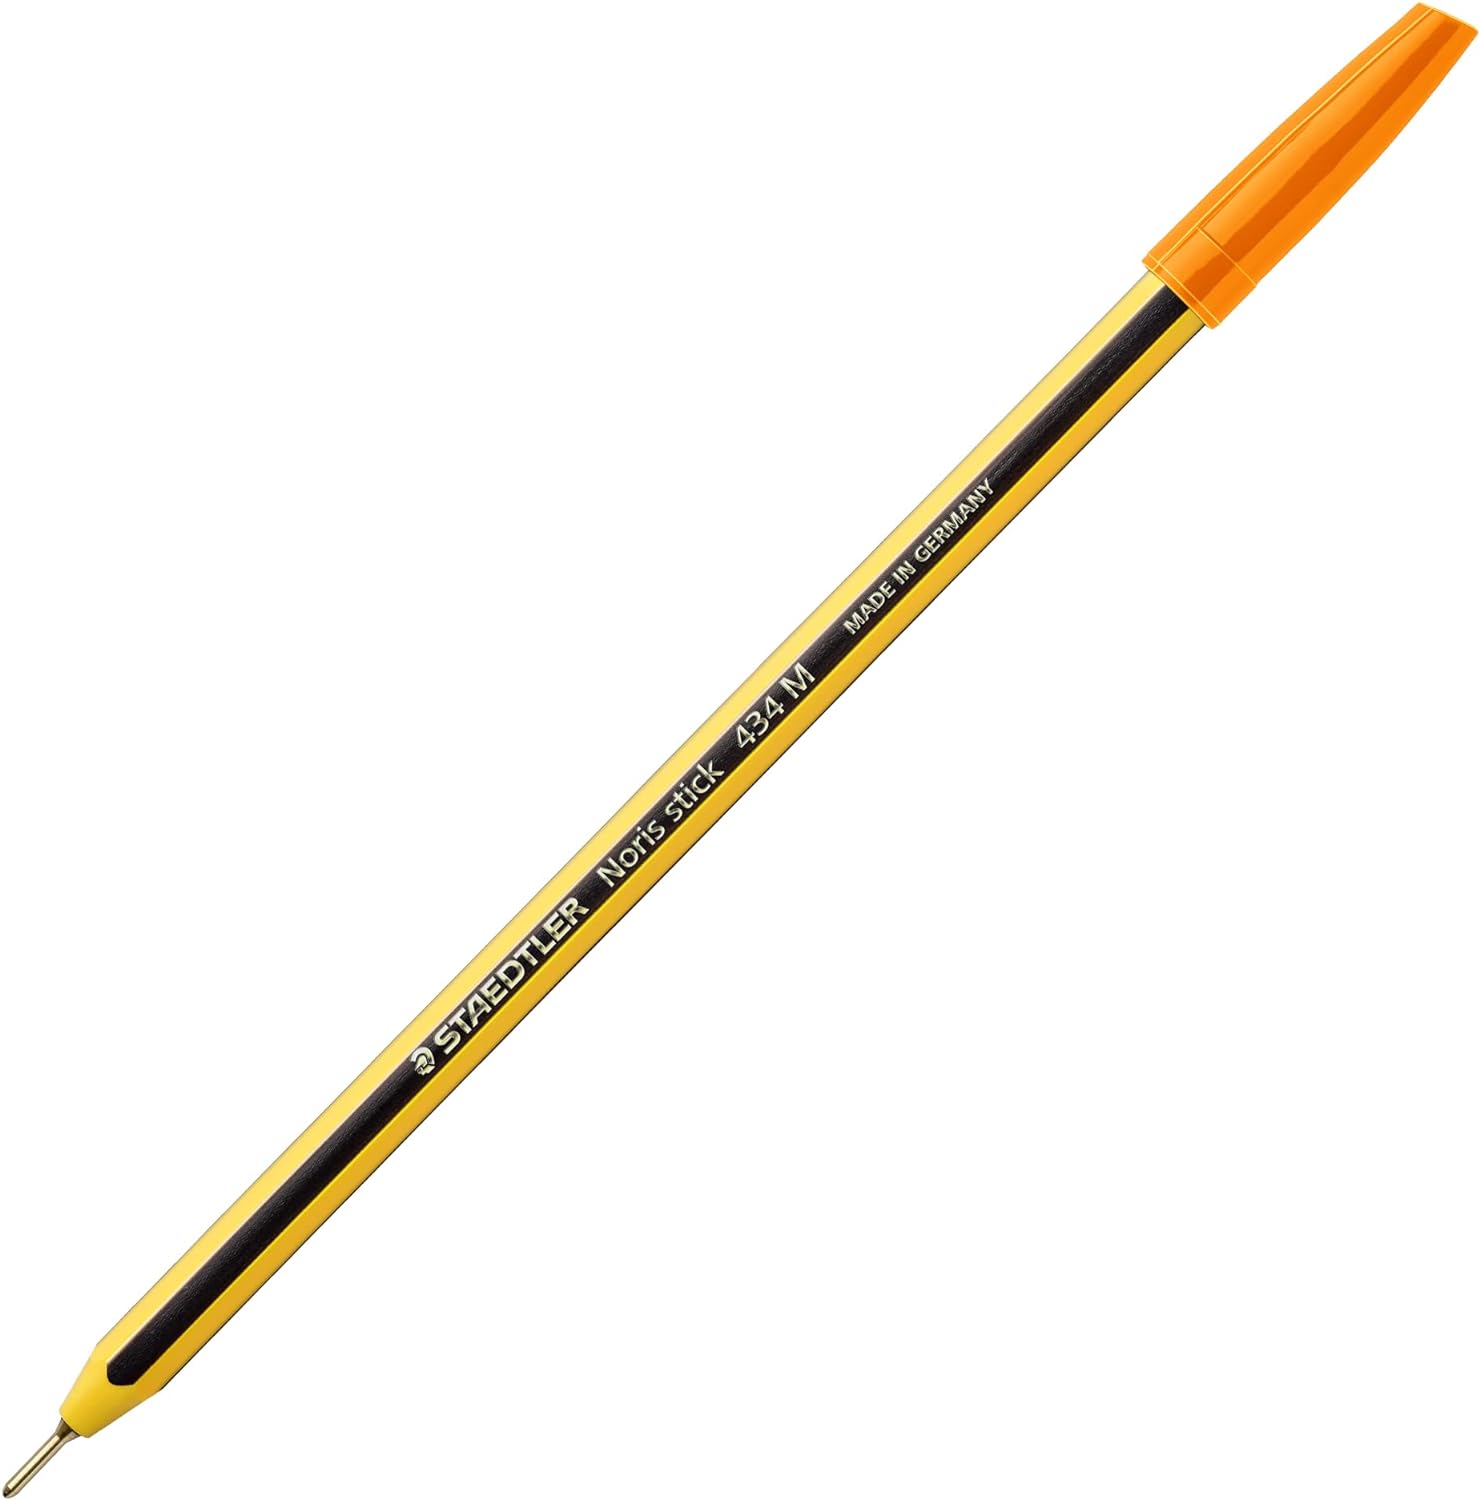 cf. 20 pz. Noris® stick 434 M Penna a sfera colore arancio